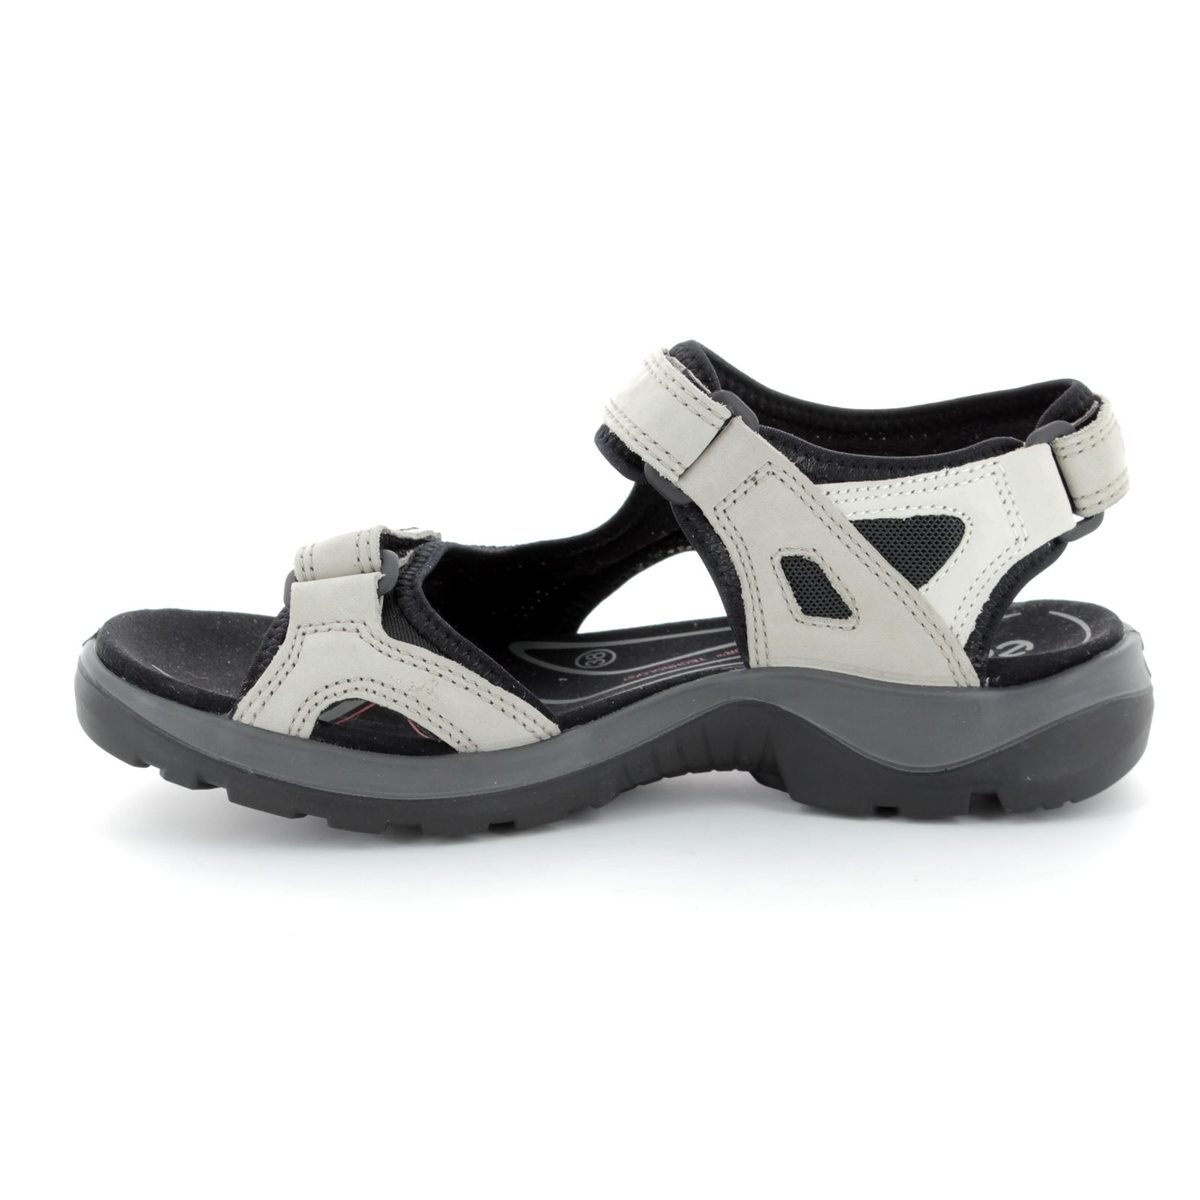 ECCO Offroad Lady 069563-54695 Light grey multi Walking Sandals